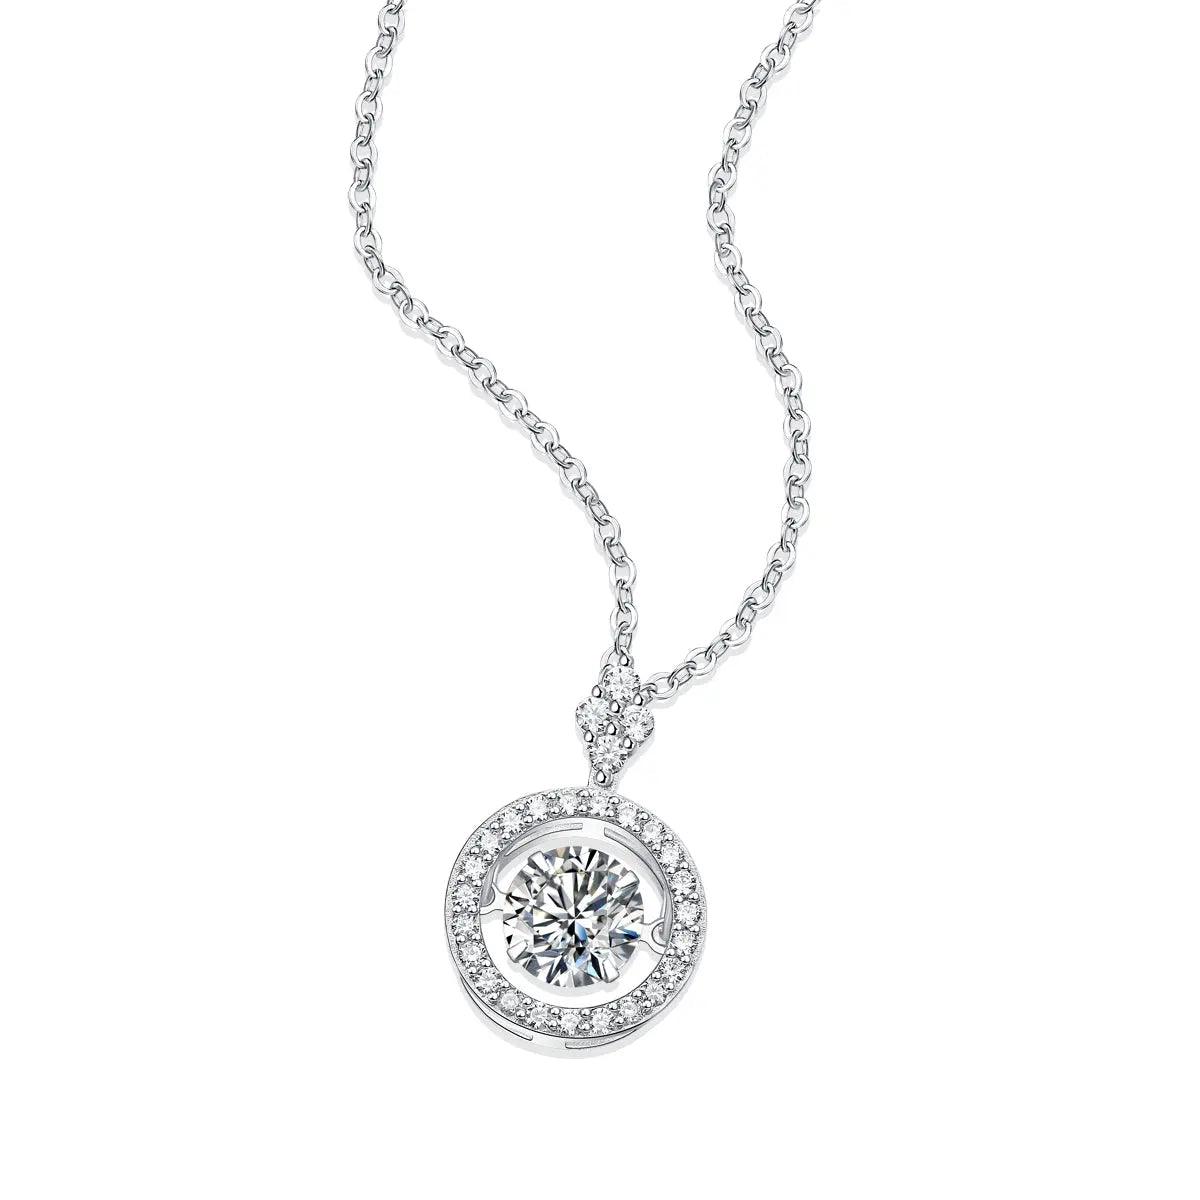 FairyLocus “Sparkling Love” 1ct Moissanite Pendant Necklace Sterling Silver D Color VVS1 Clarity Brilliant Round Cut Lab Created Diamond Necklace FLZZNLMS14 FairyLocus